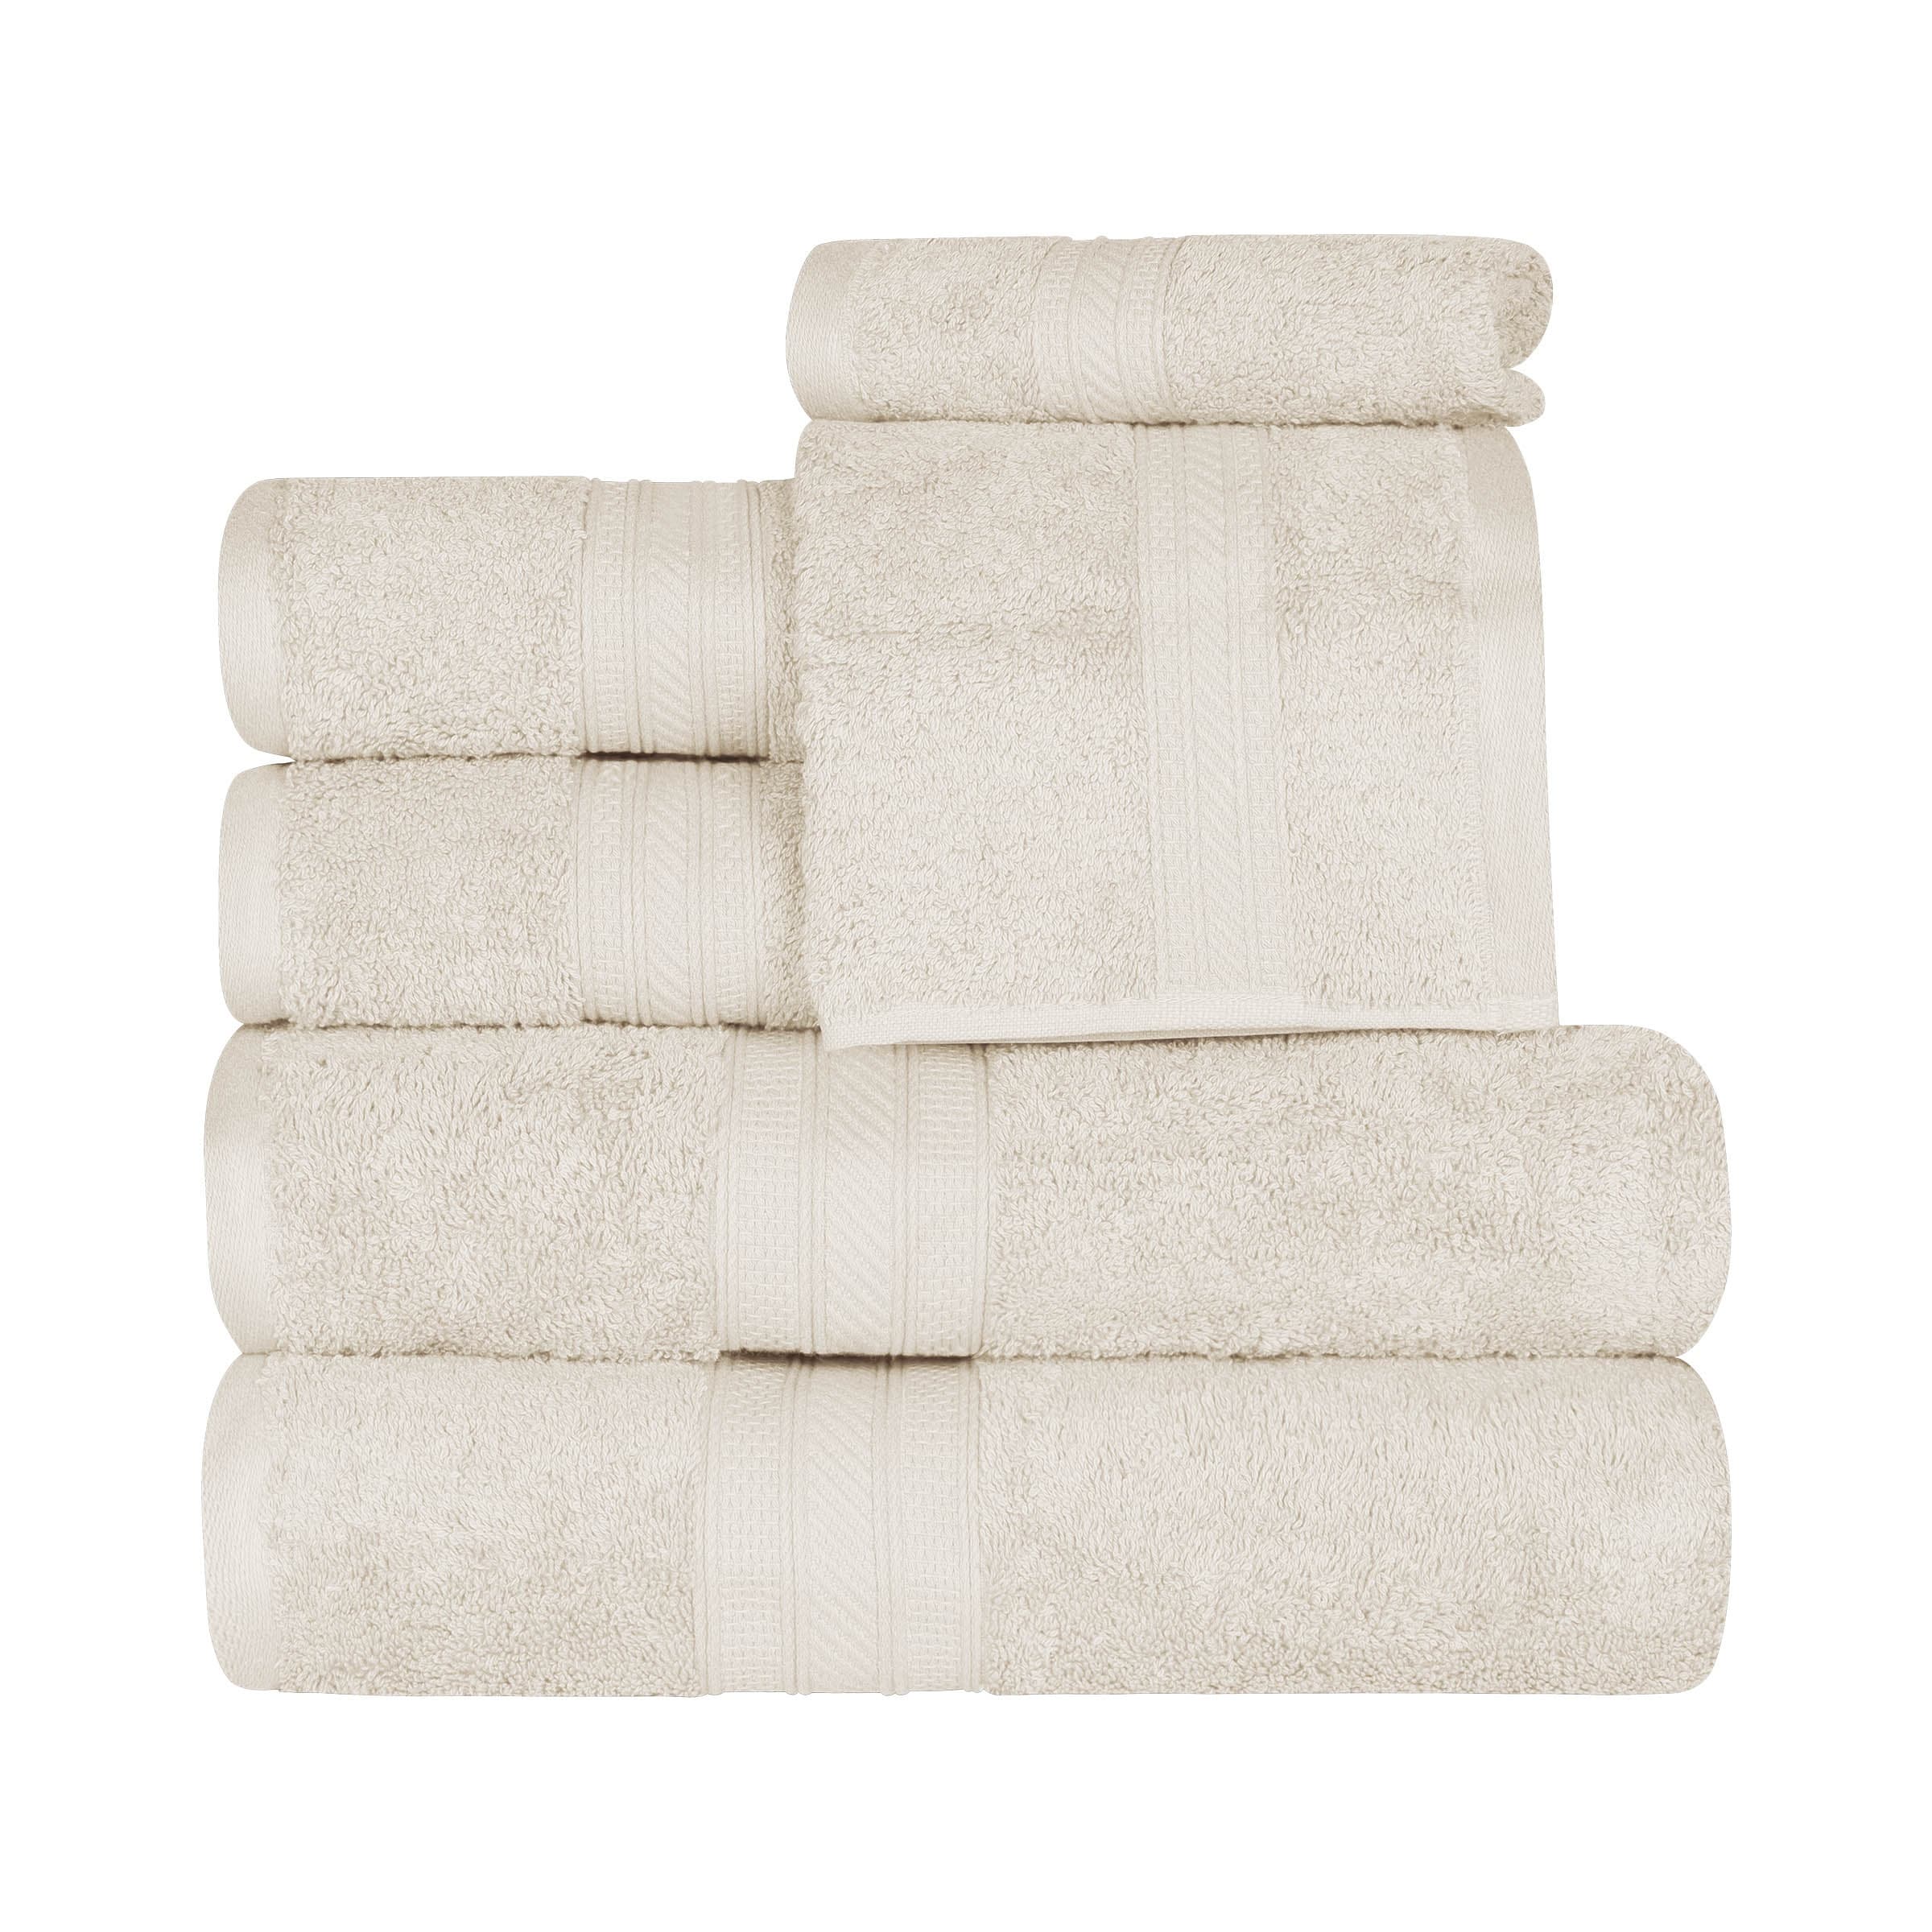 Linen-Bordered 650-Gram Turkish Cotton Towel Collection